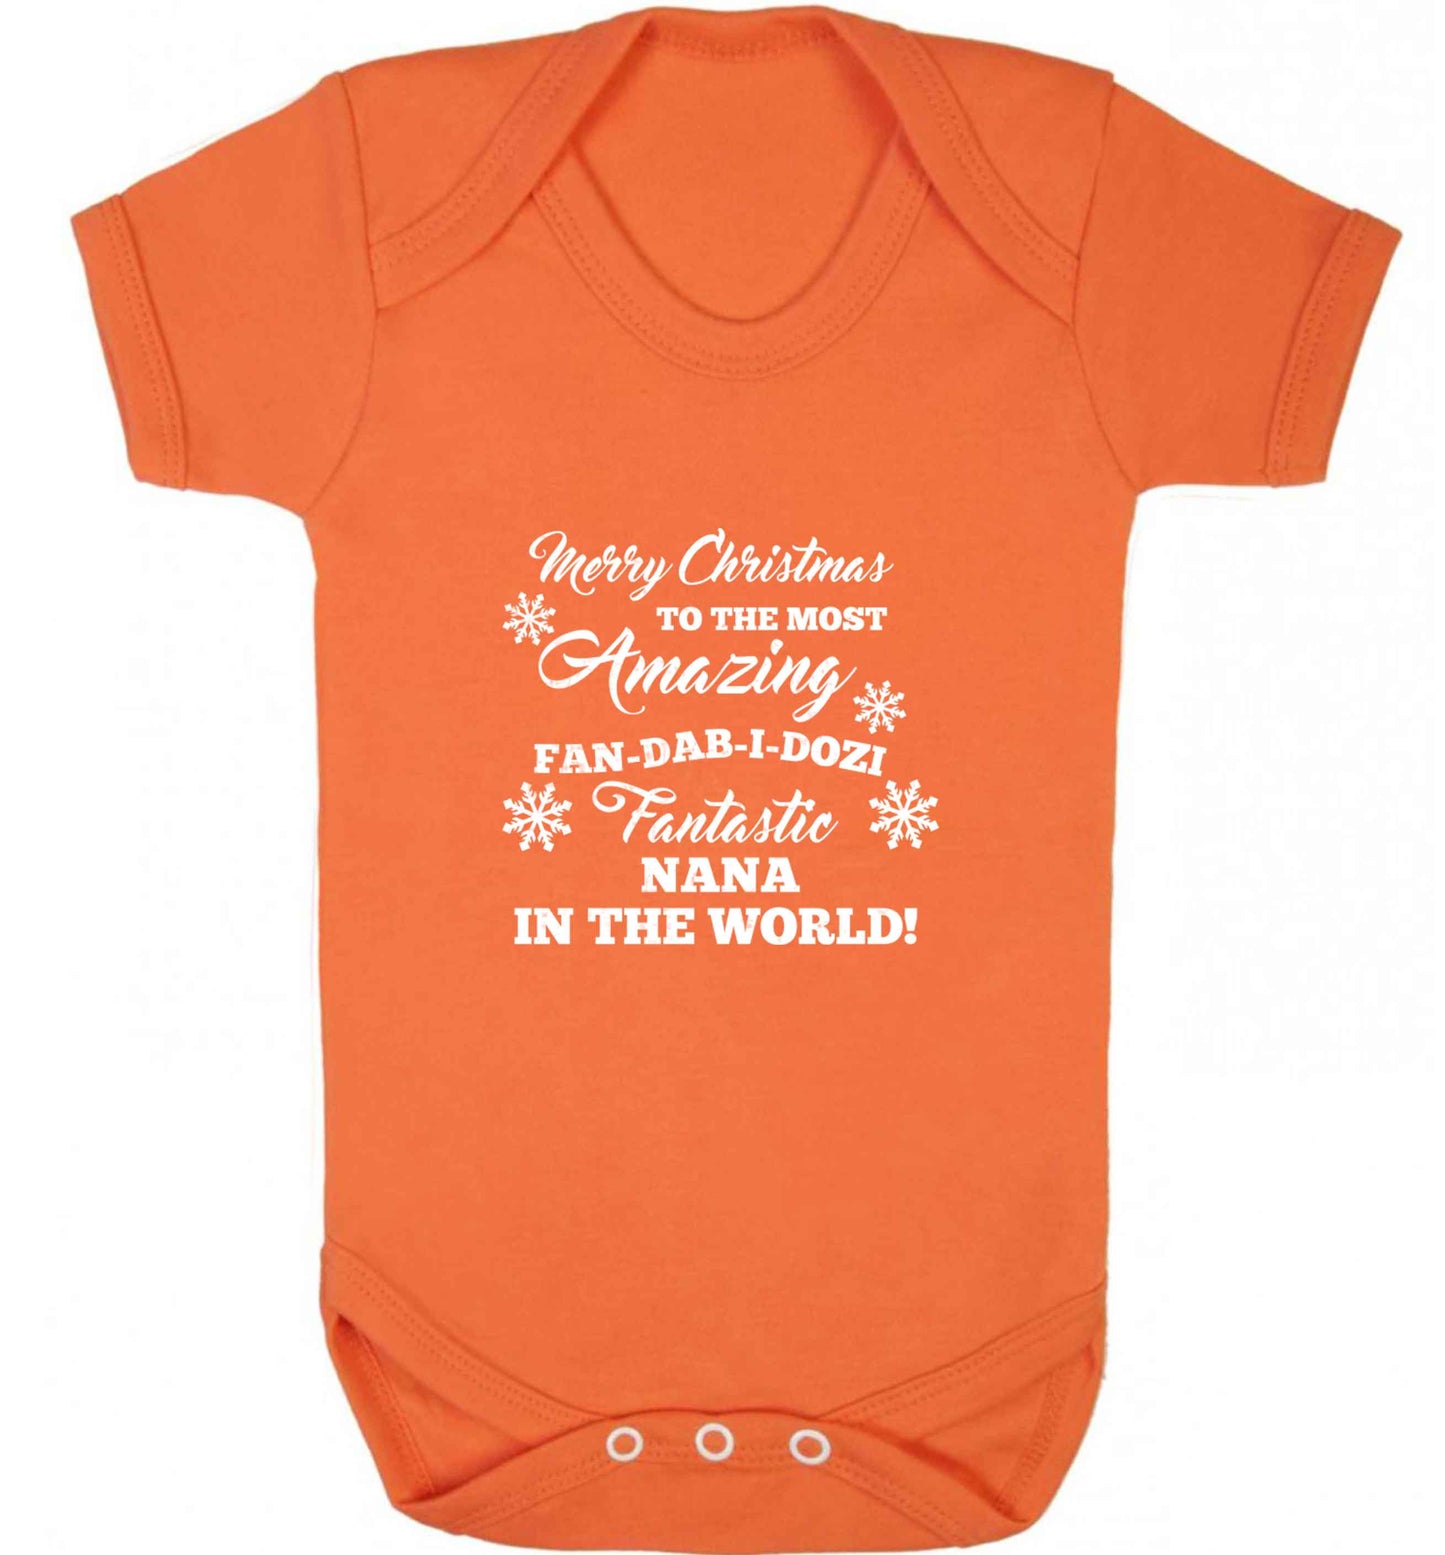 Merry Christmas to the most amazing fan-dab-i-dozi fantasic Nana in the world baby vest orange 18-24 months